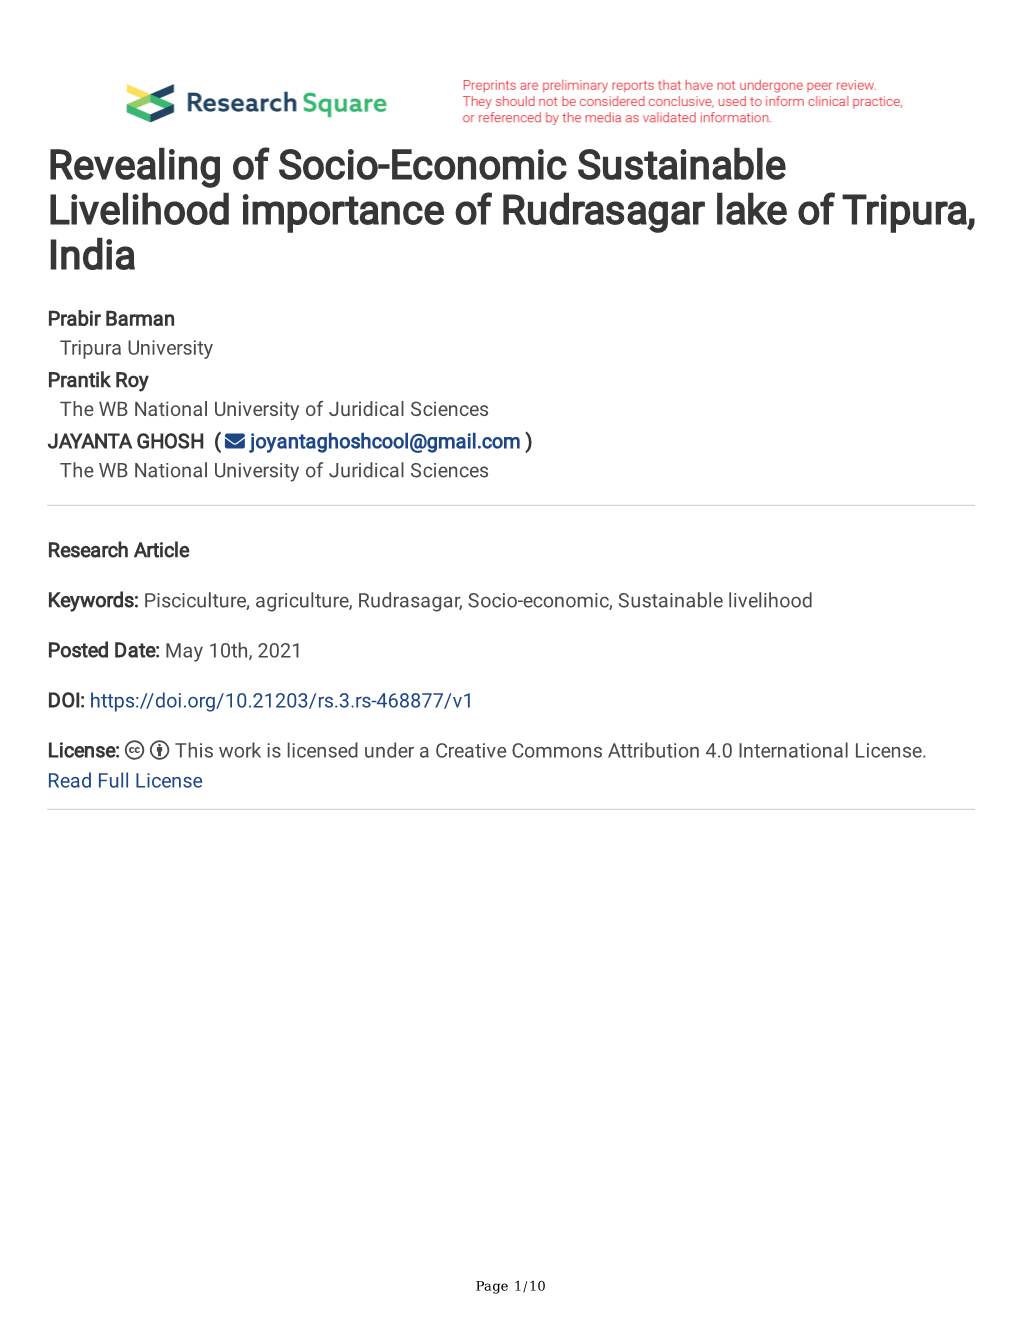 Revealing of Socio-Economic Sustainable Livelihood Importance of Rudrasagar Lake of Tripura, India